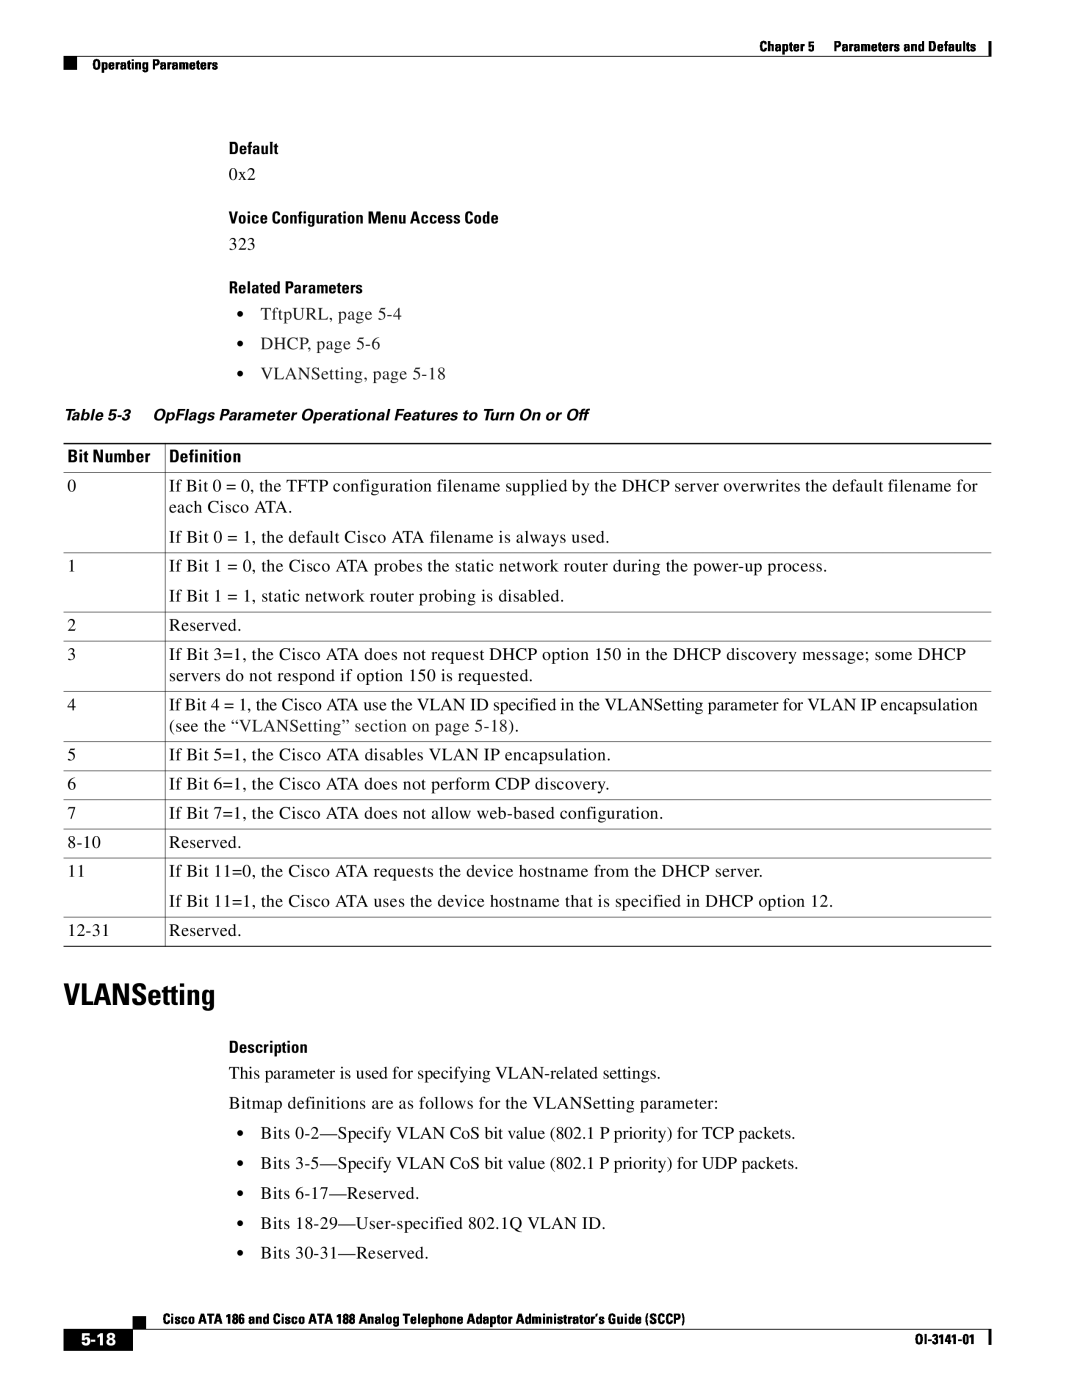 Cisco Systems ATA 186 VLANSetting, Default, Voice Configuration Menu Access Code, Related Parameters, Description, 5-18 